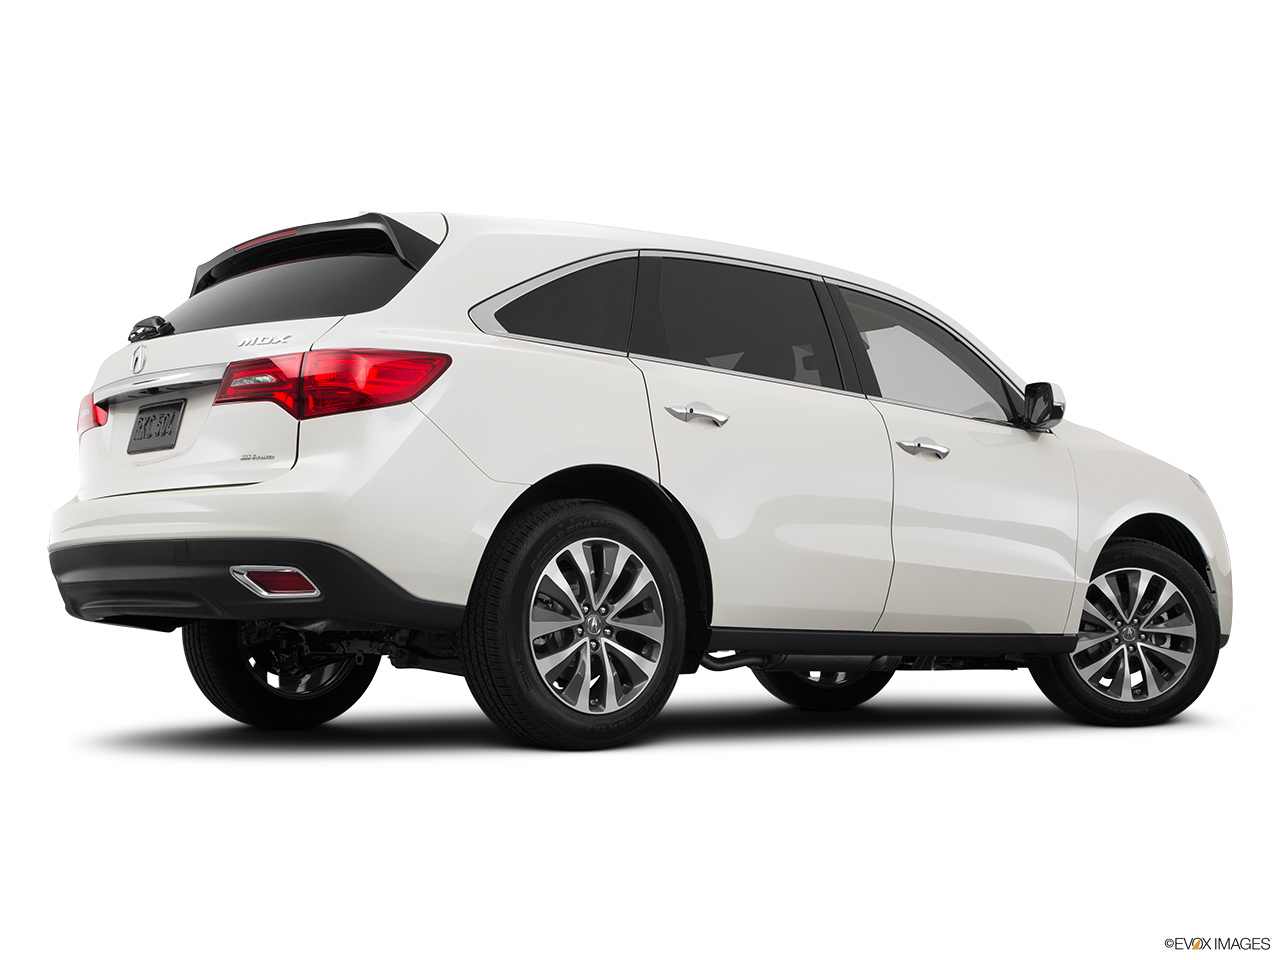 2016 Acura MDX SH-AWD Low/wide rear 5/8. 